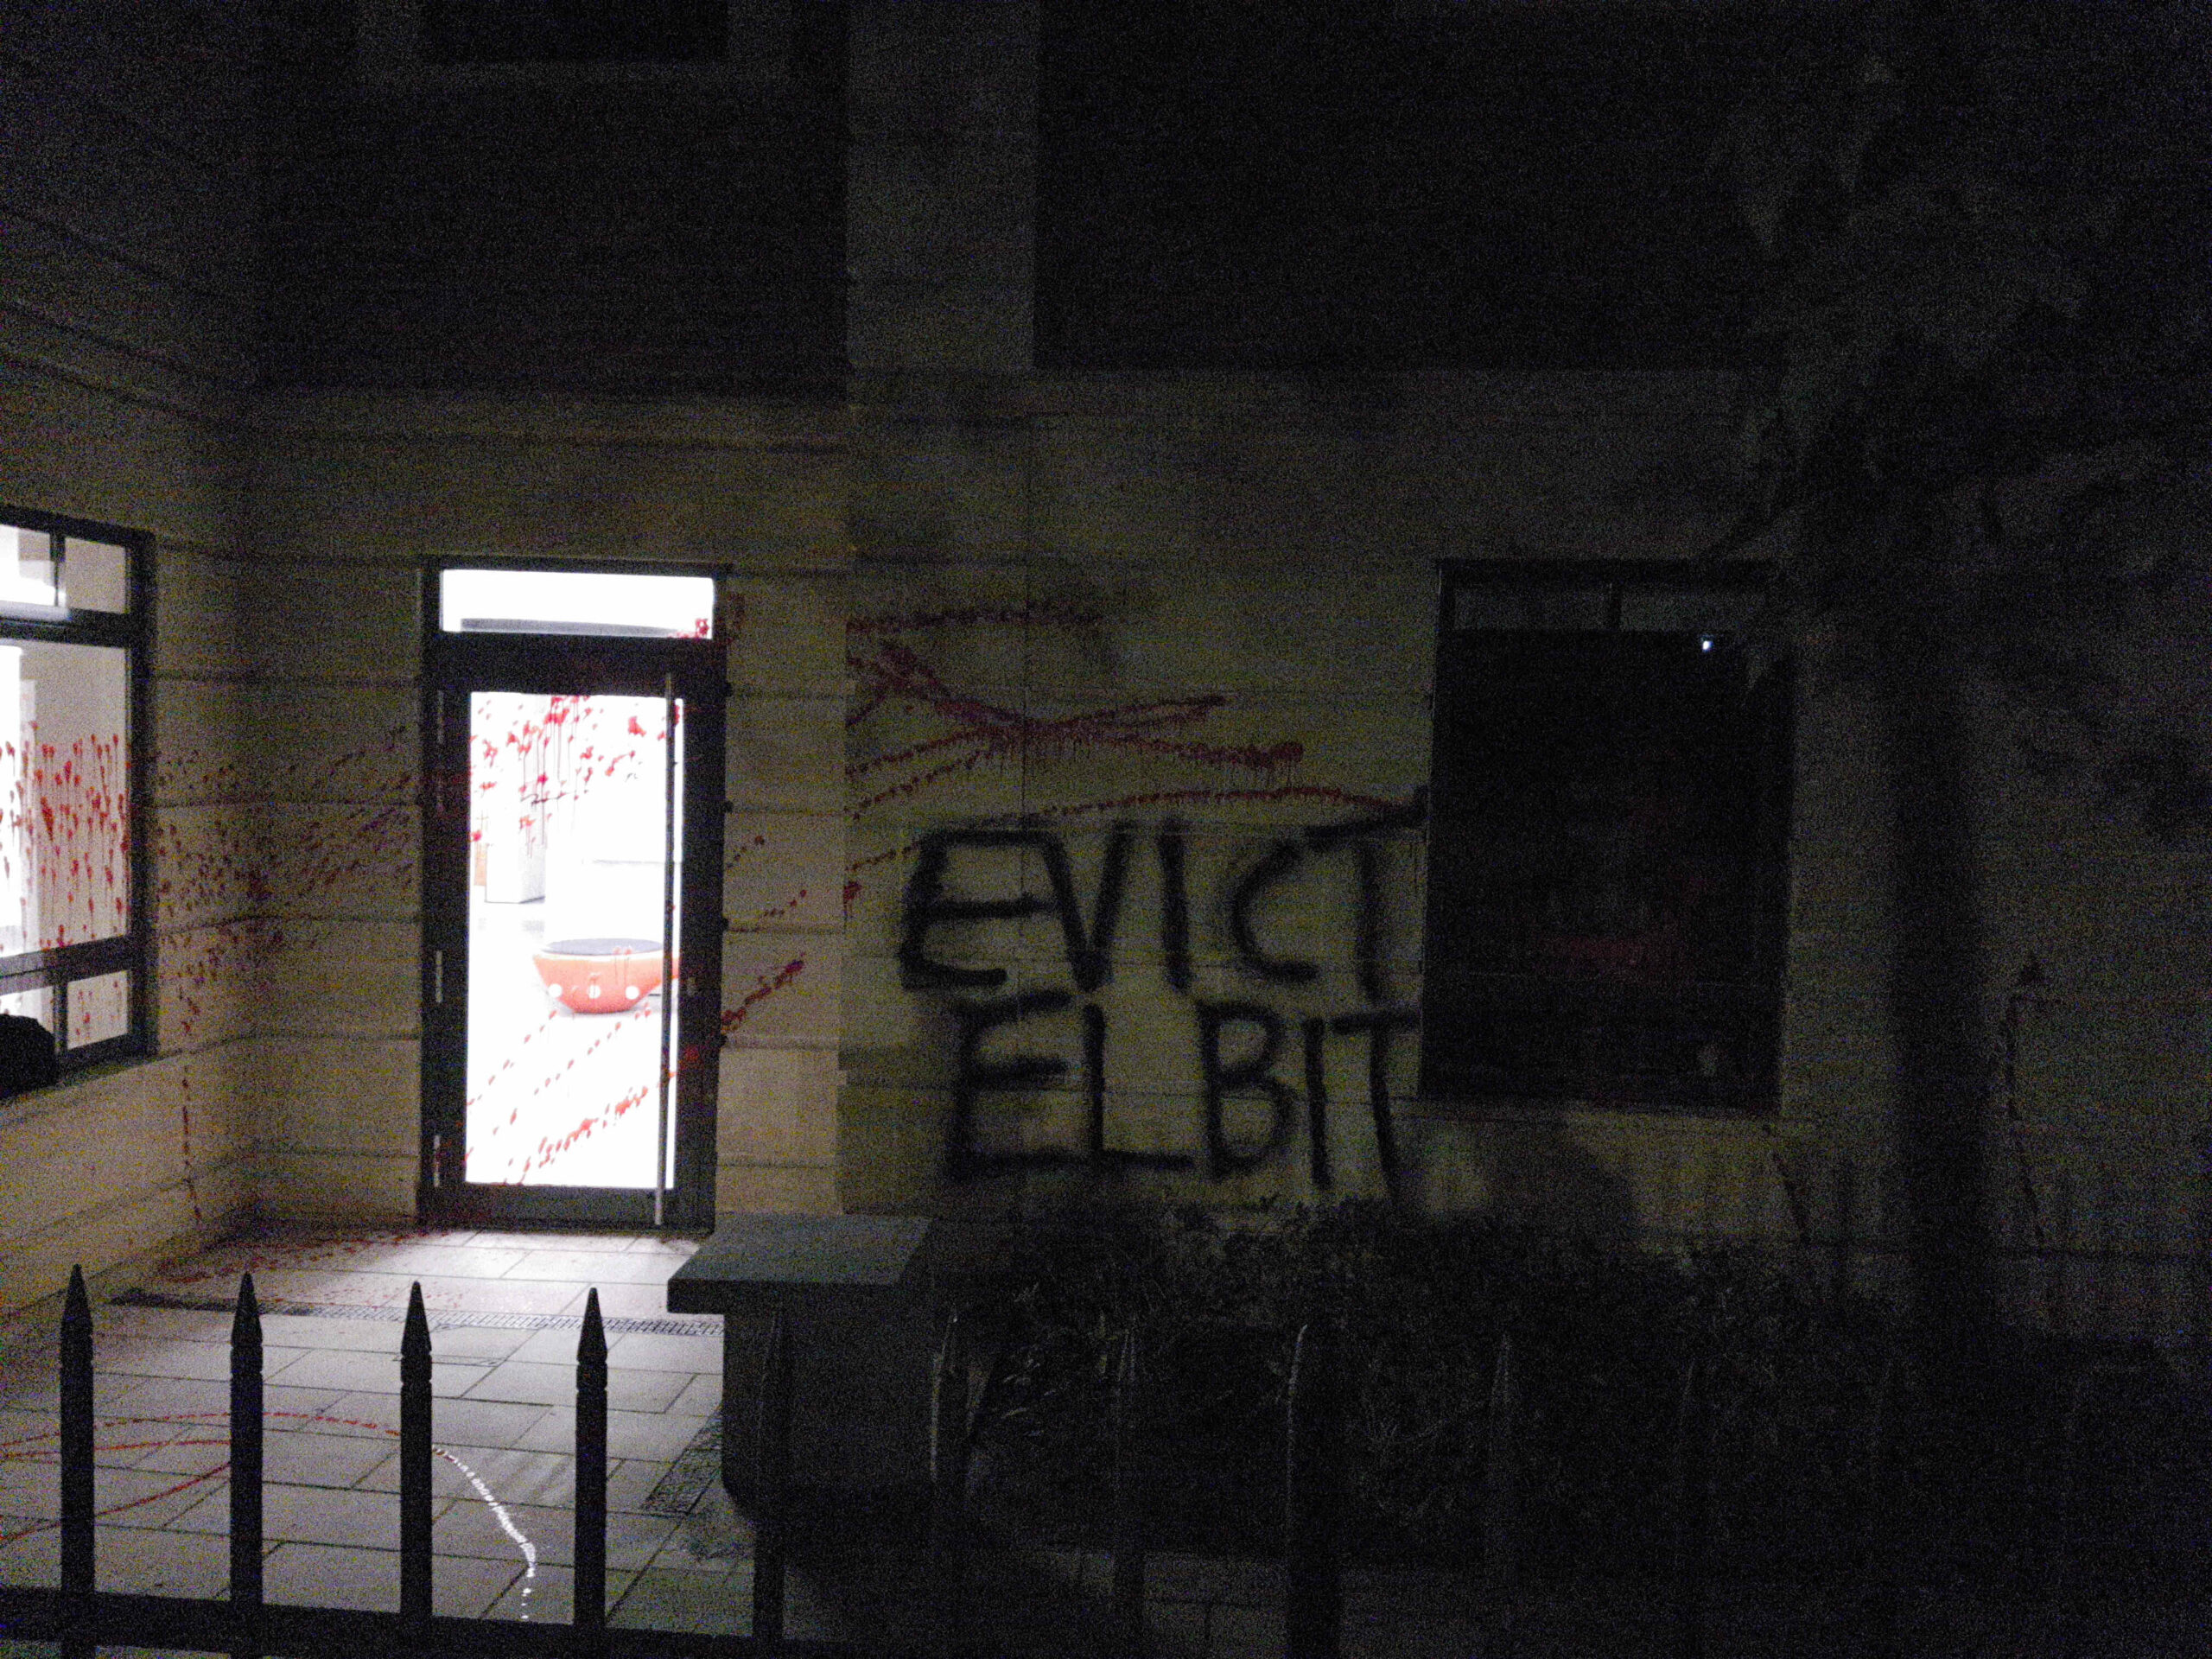 Evict Elbit action at JLL Bristol